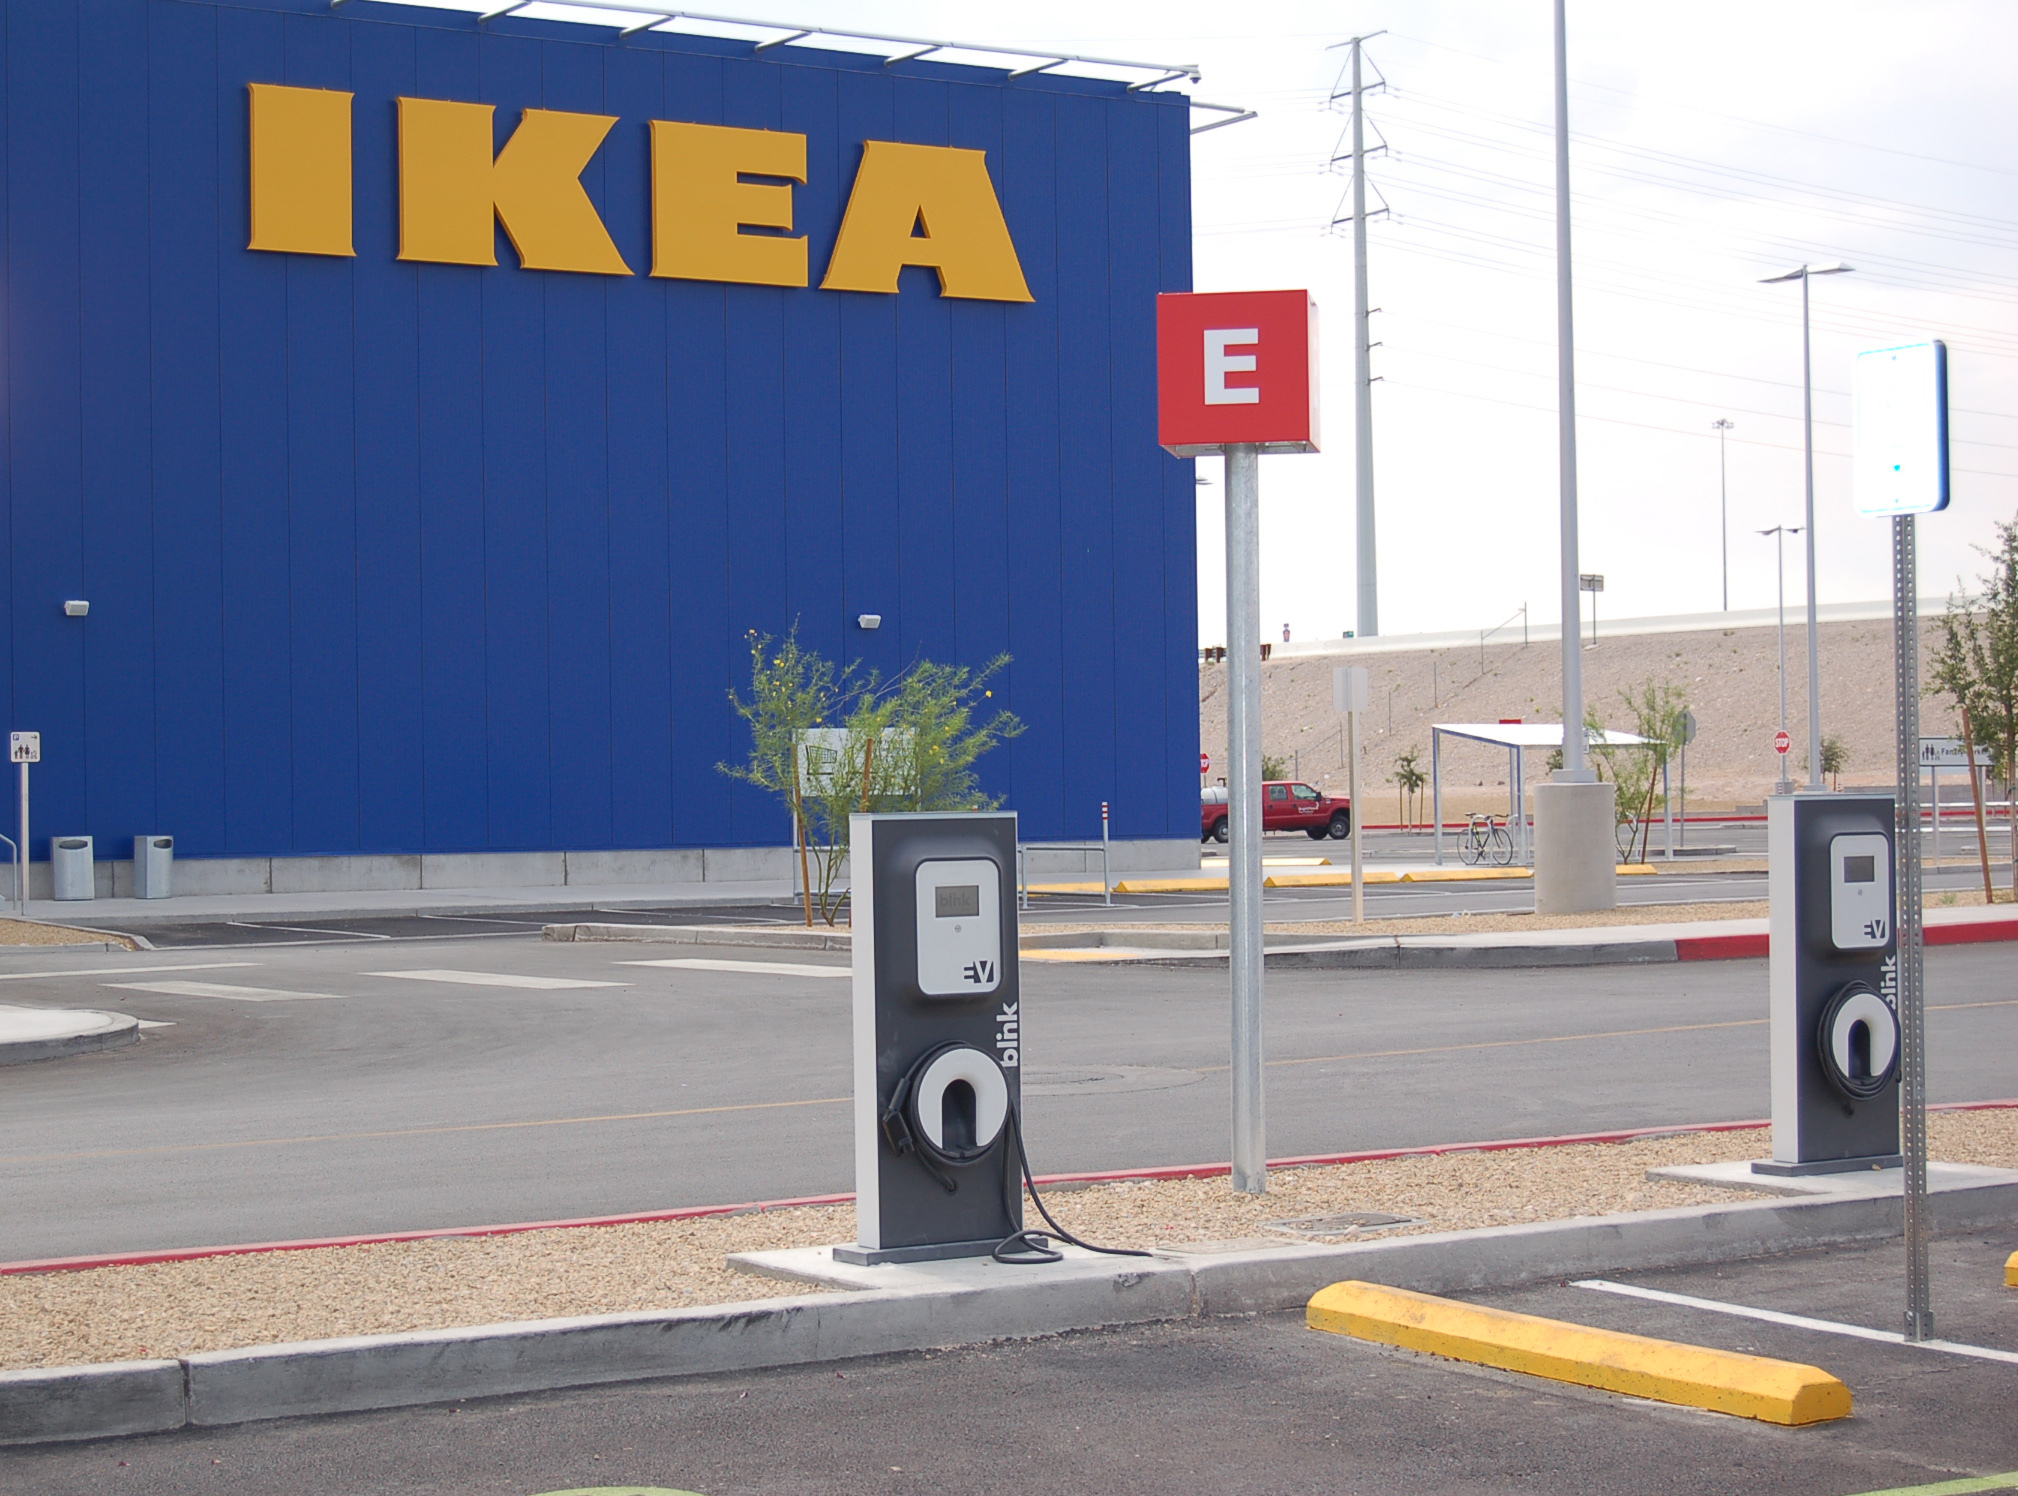 IKEA Las Vegas PlugsIn 3 Electric Vehicle Charging Stations; 14th IKEA